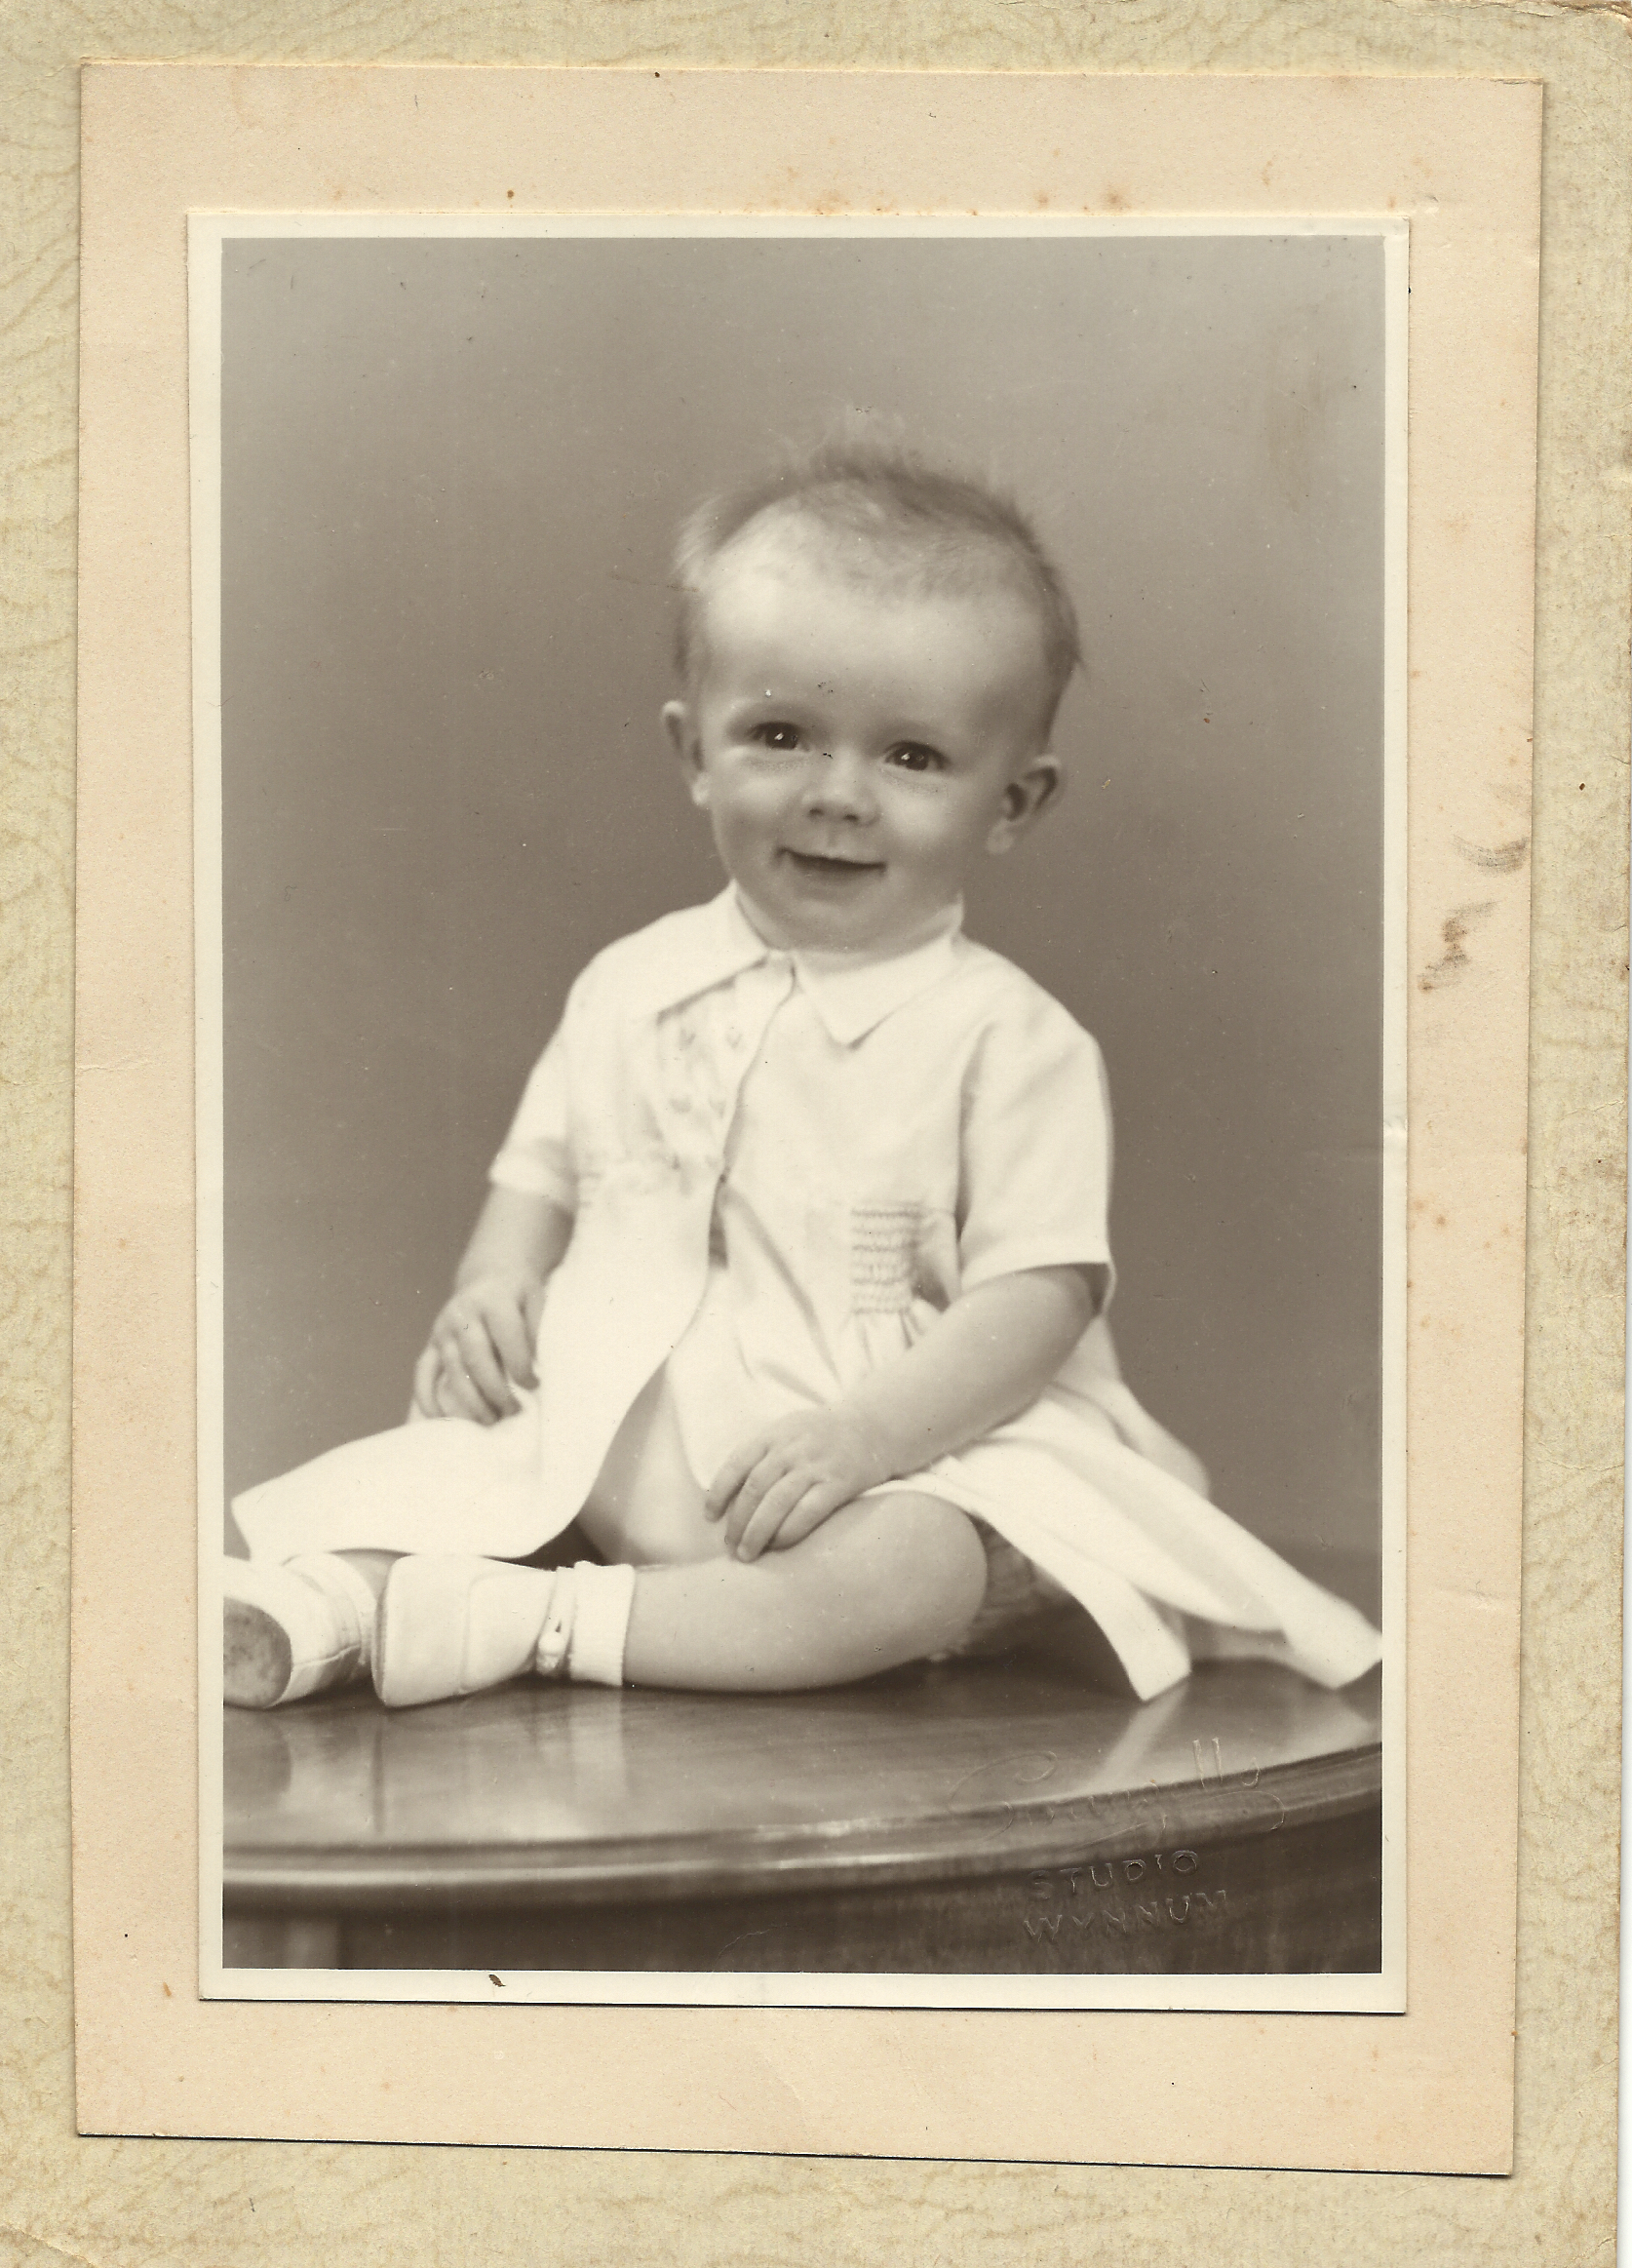 1950 Leslie Thornton 7 months old